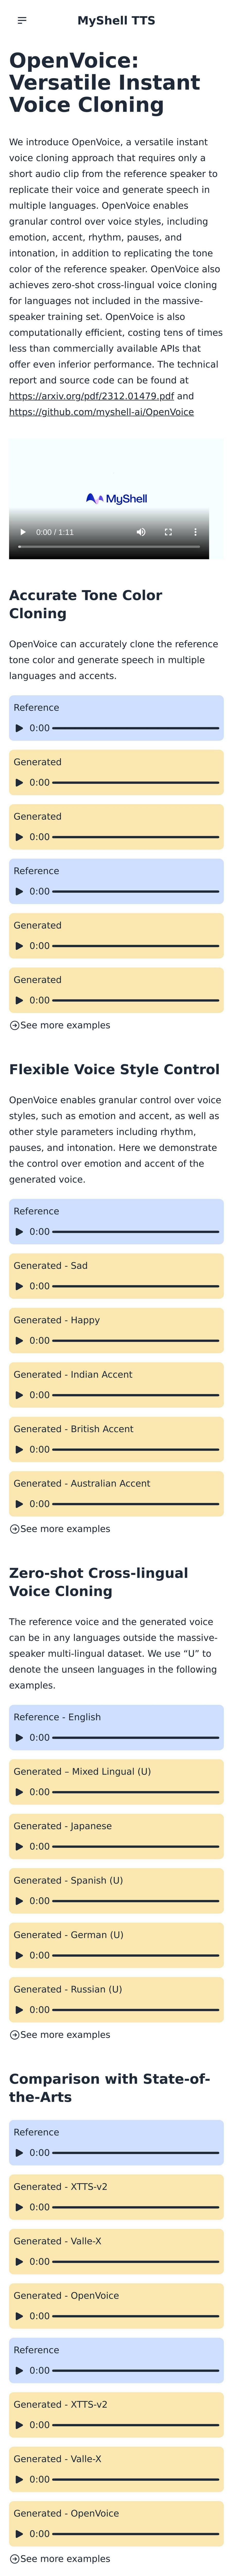 OpenVoice: Versatile instant voice cloning